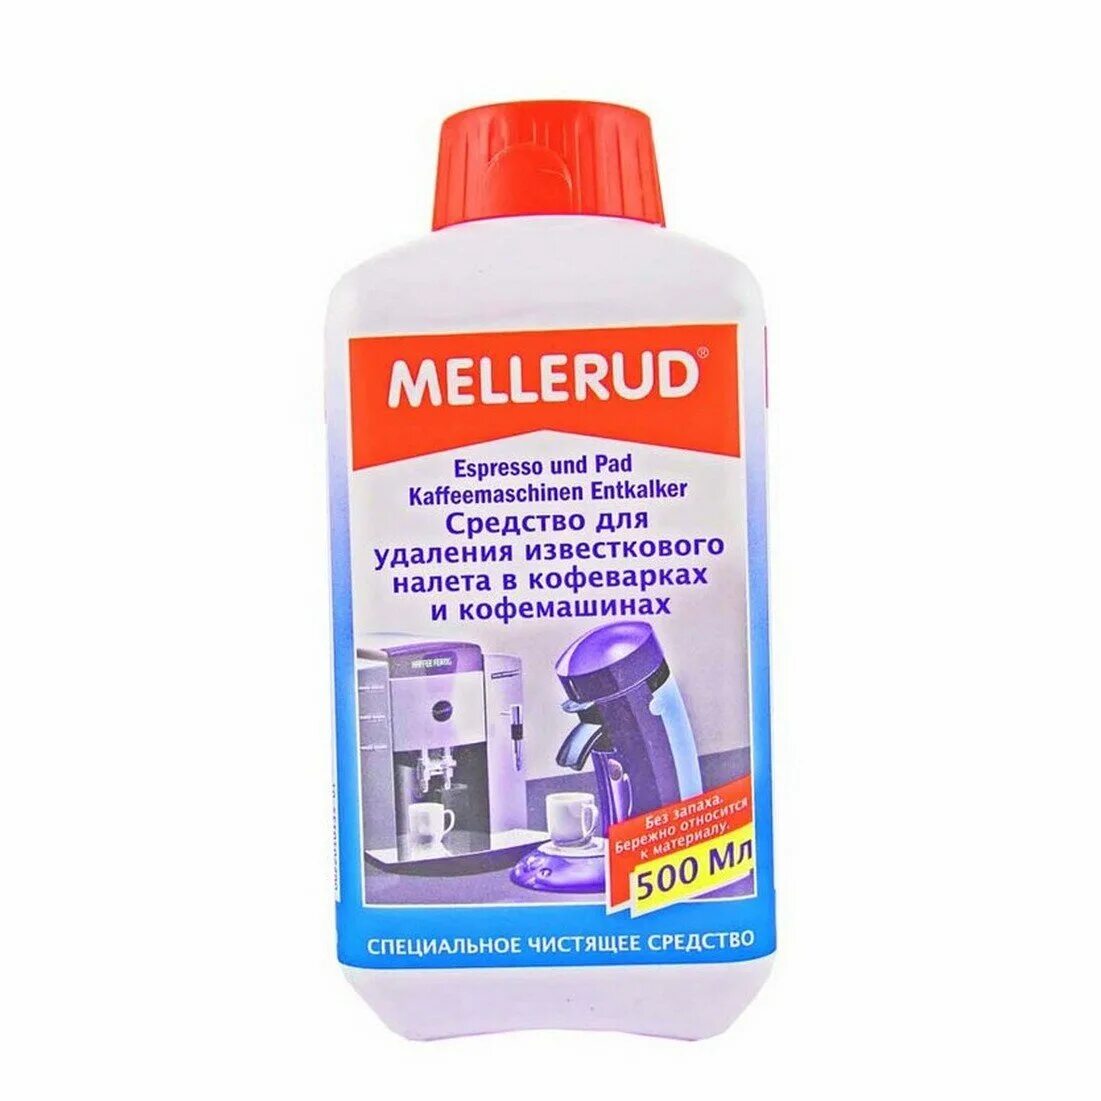 Mellerud чистящее средство для душевых кабин 0,5 л. Чистящее средство для пластиковых изделий Mellerud. Средство для чистки туалета Mellerud, 1л. Средство для очистки от плесени Mellerud, 500мл.